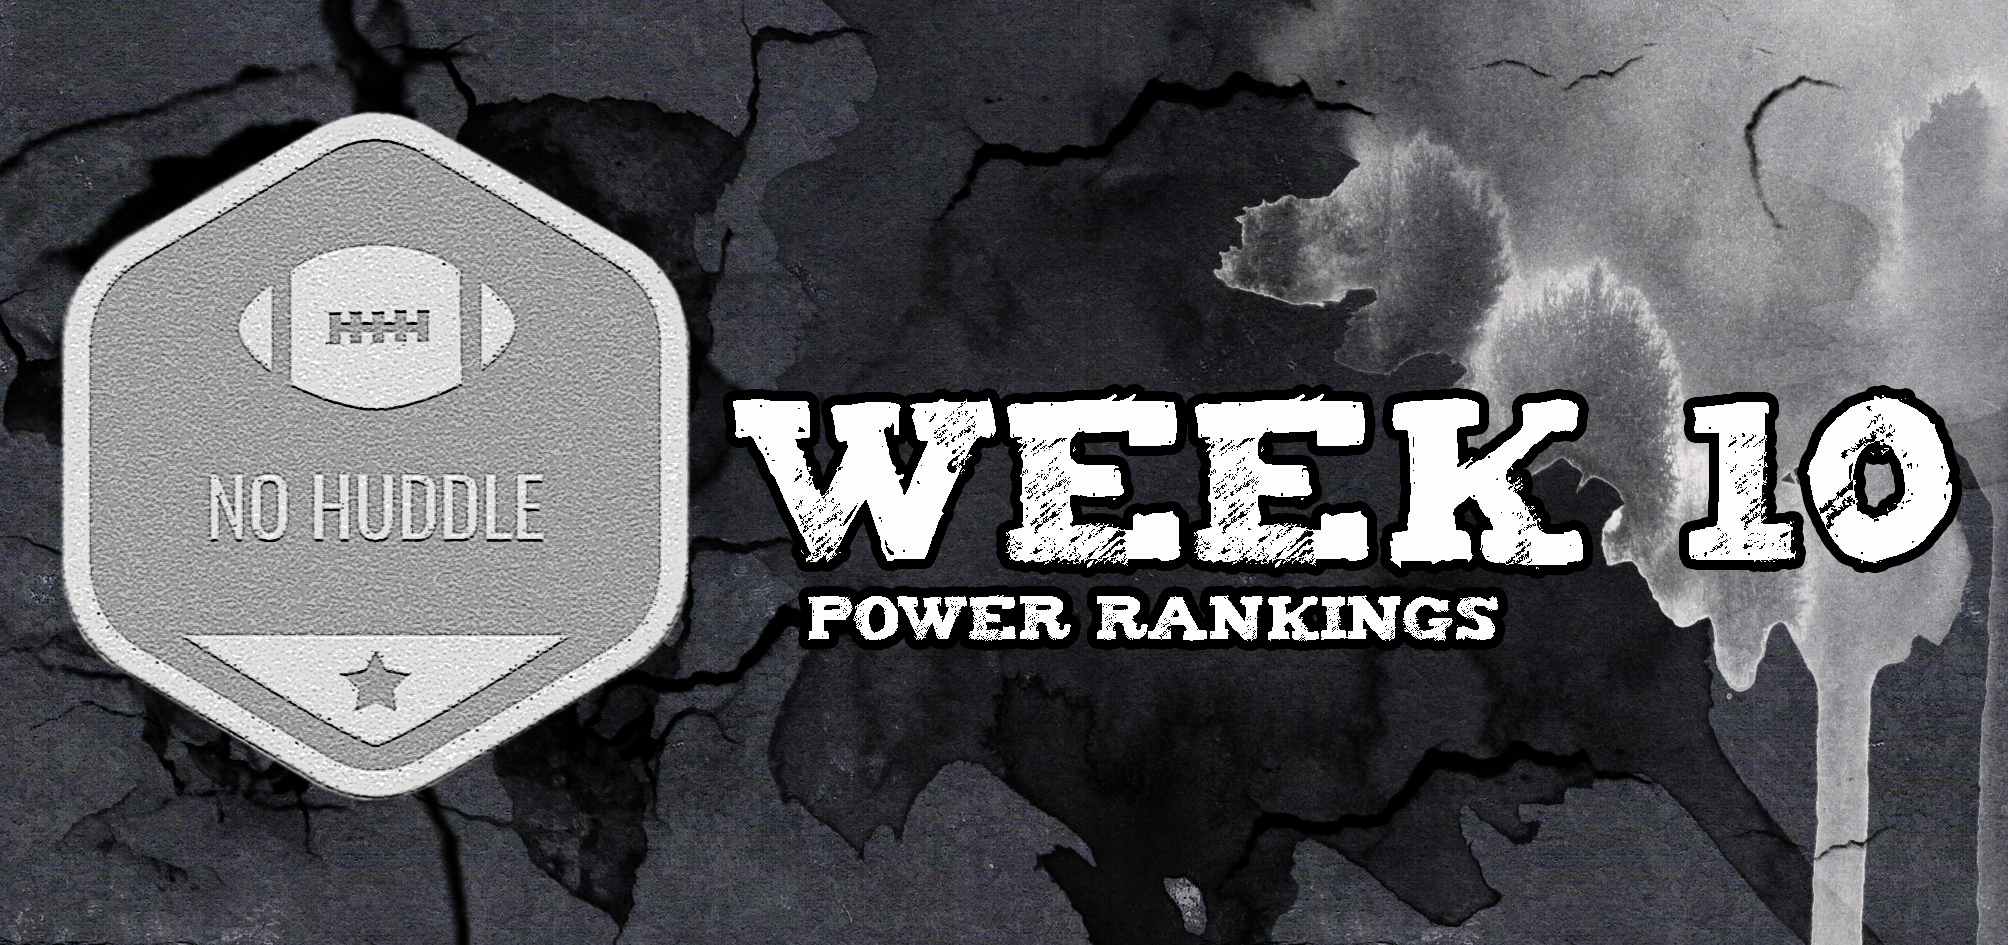 Power Rankings: Semana 10